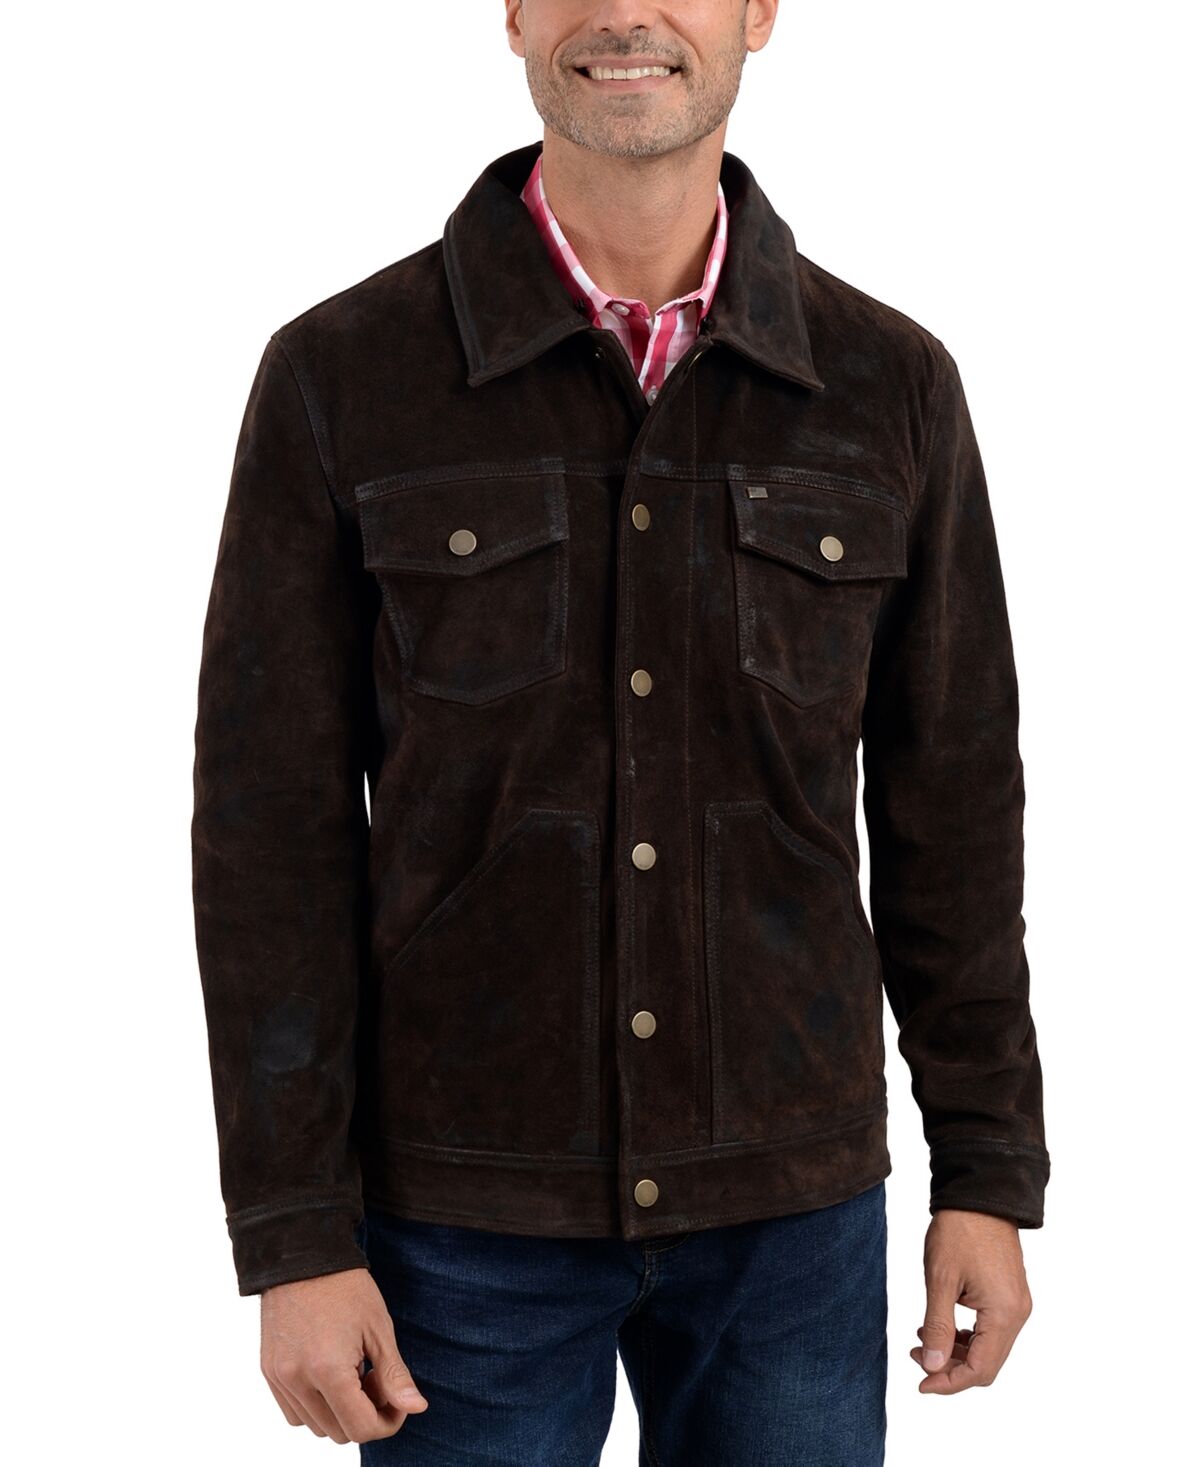 Frye Men's Vintage Leather Trucker Jacket - Dark Brown